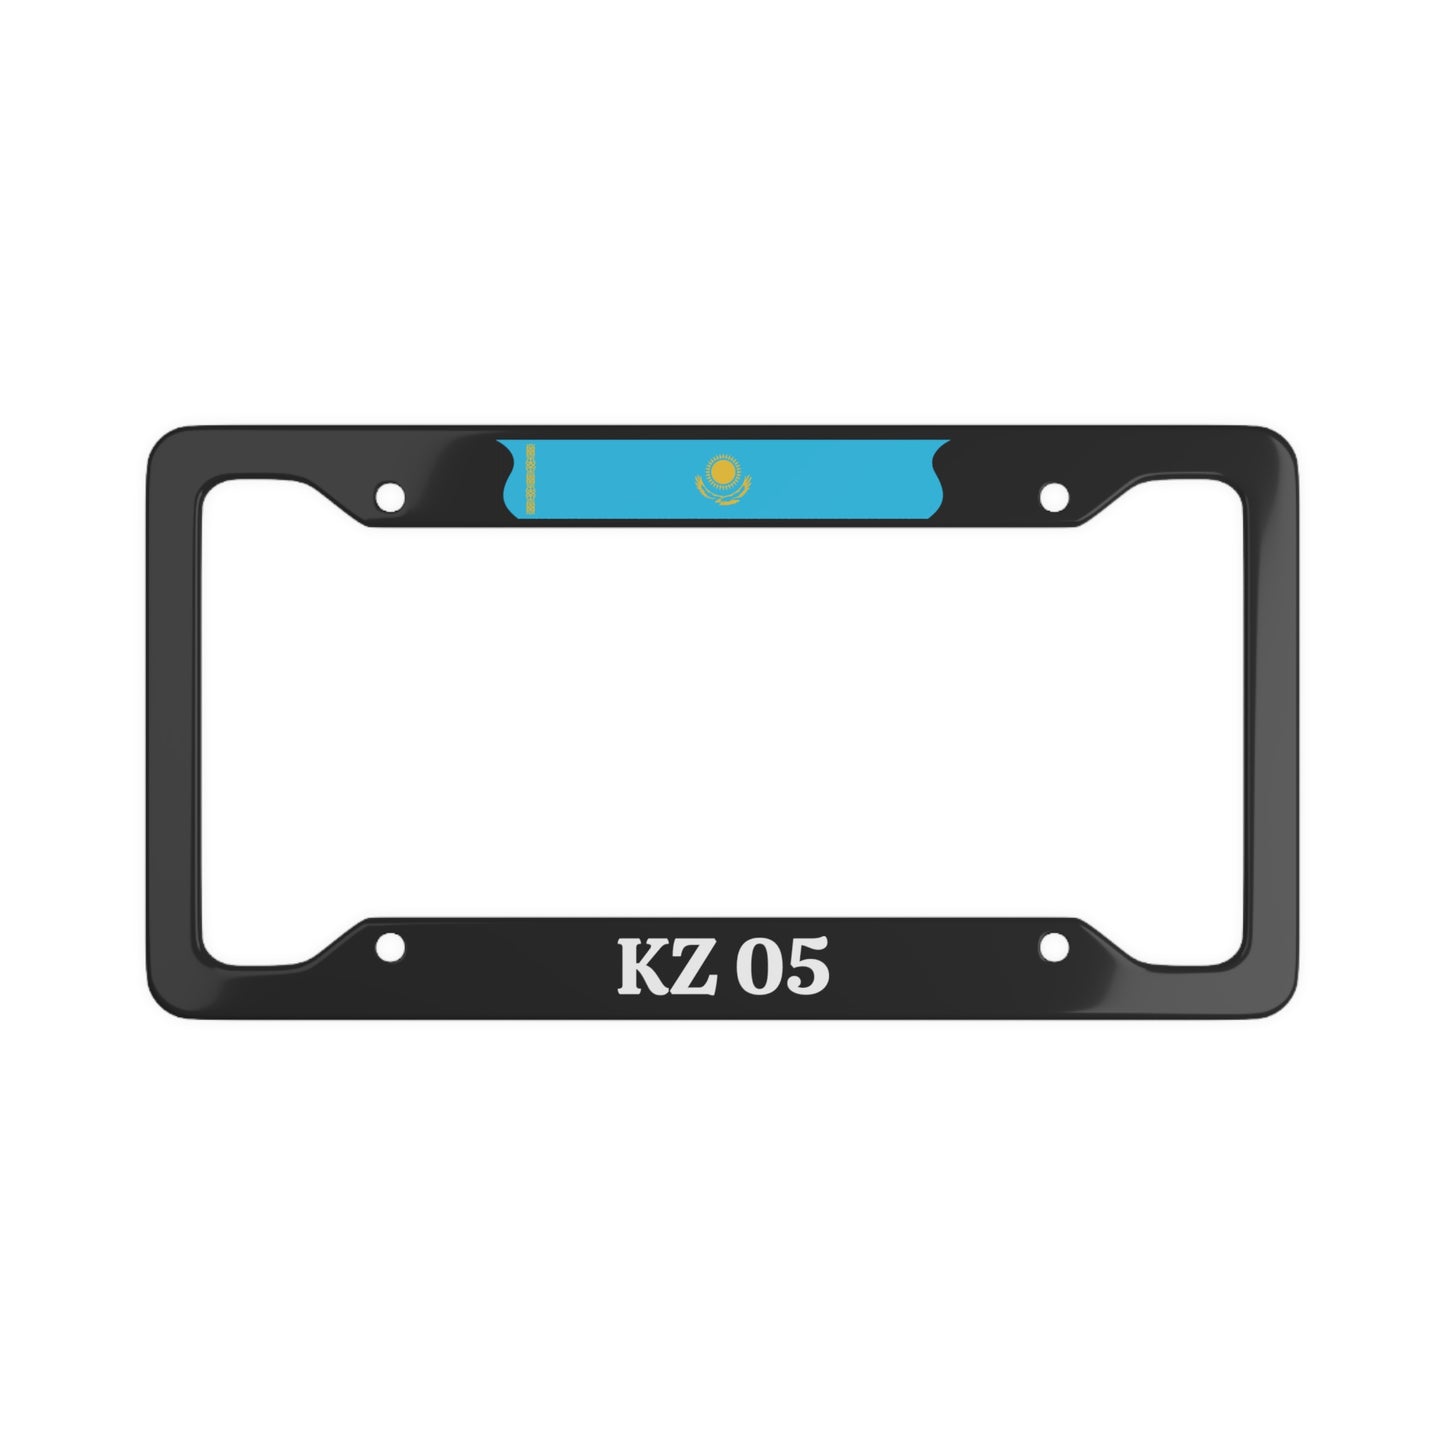 KZ 05 License Plate Frame